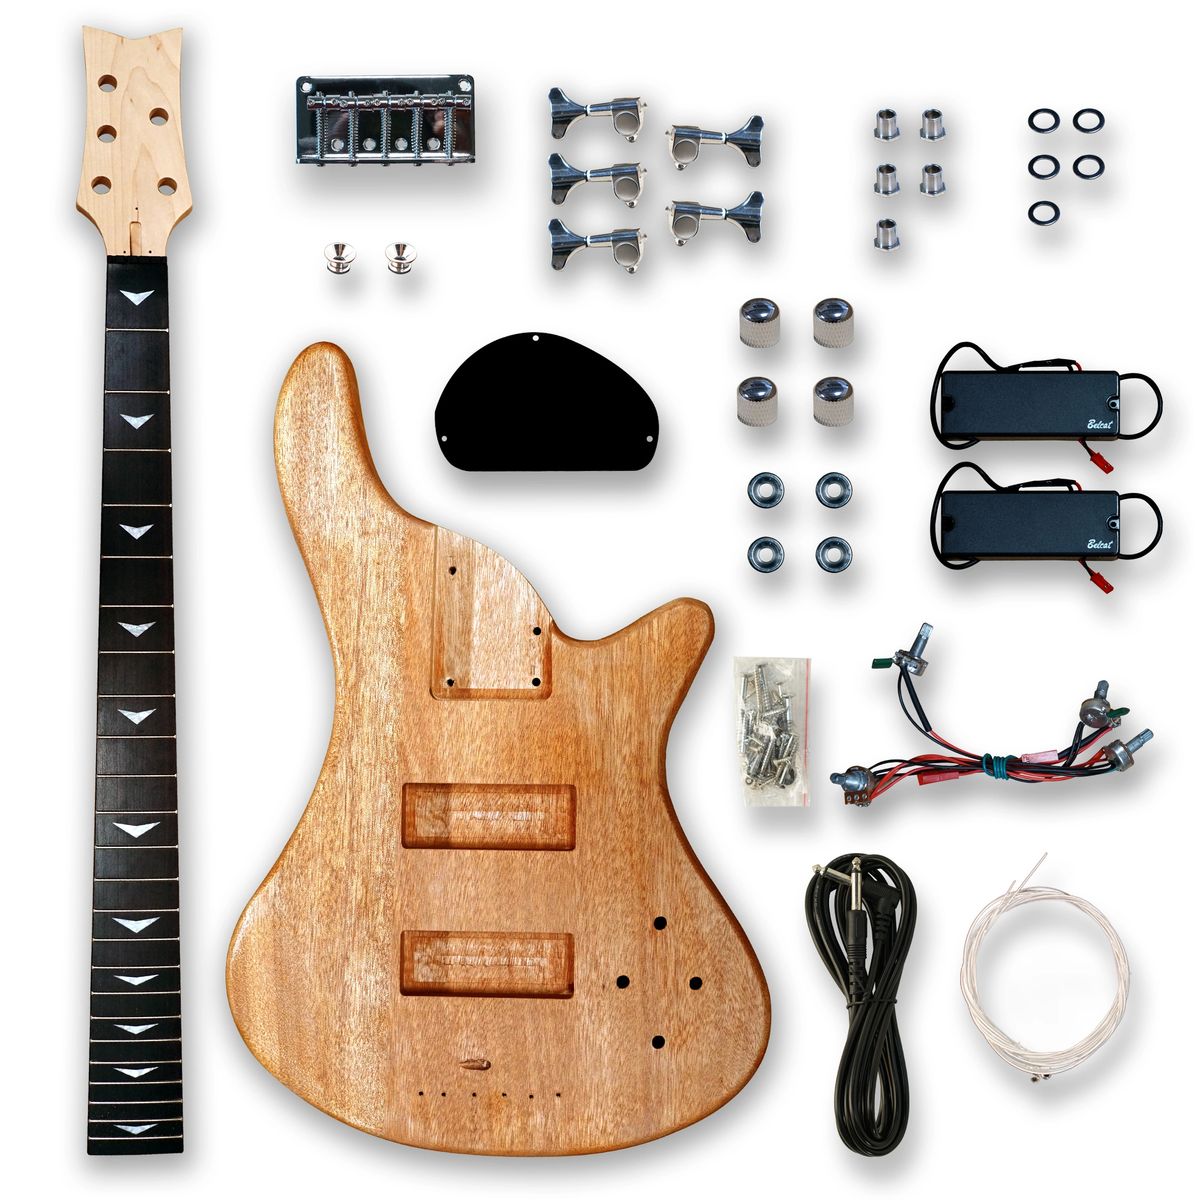 BexGears DIY Bass Guitar Kit 5 String Guitar Kits Beginner Kits okoume Body  Maple Neck Chrome Hardware Right Handed Build Your Own Guitar